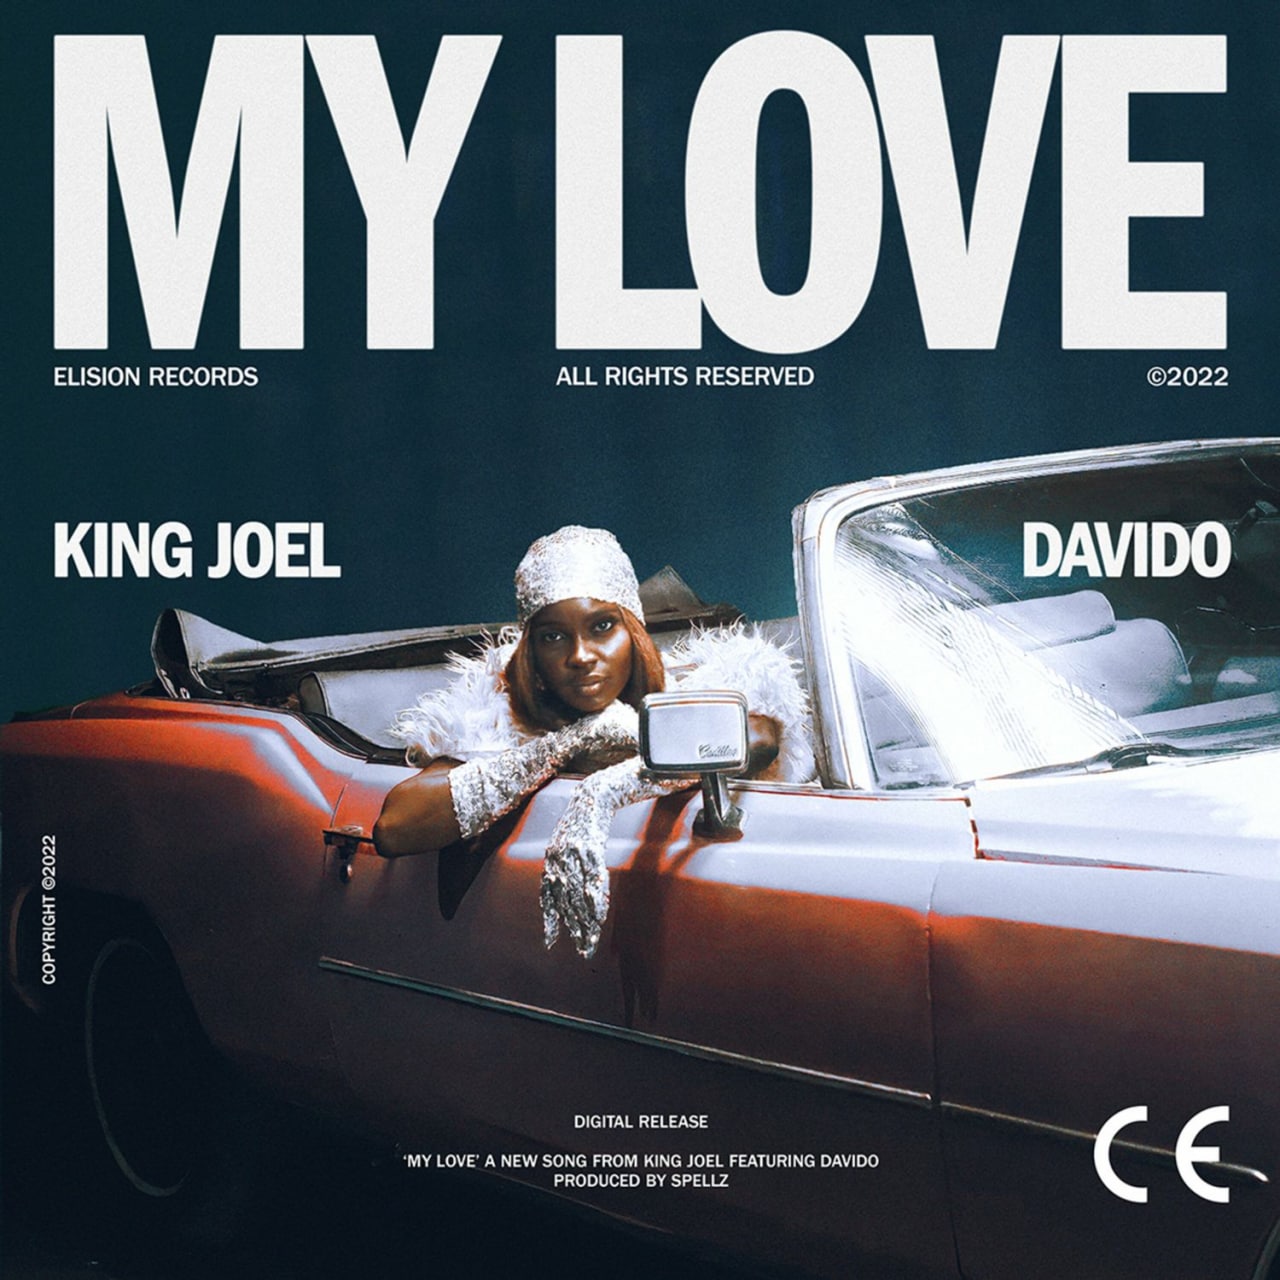 King joel x davido - My love